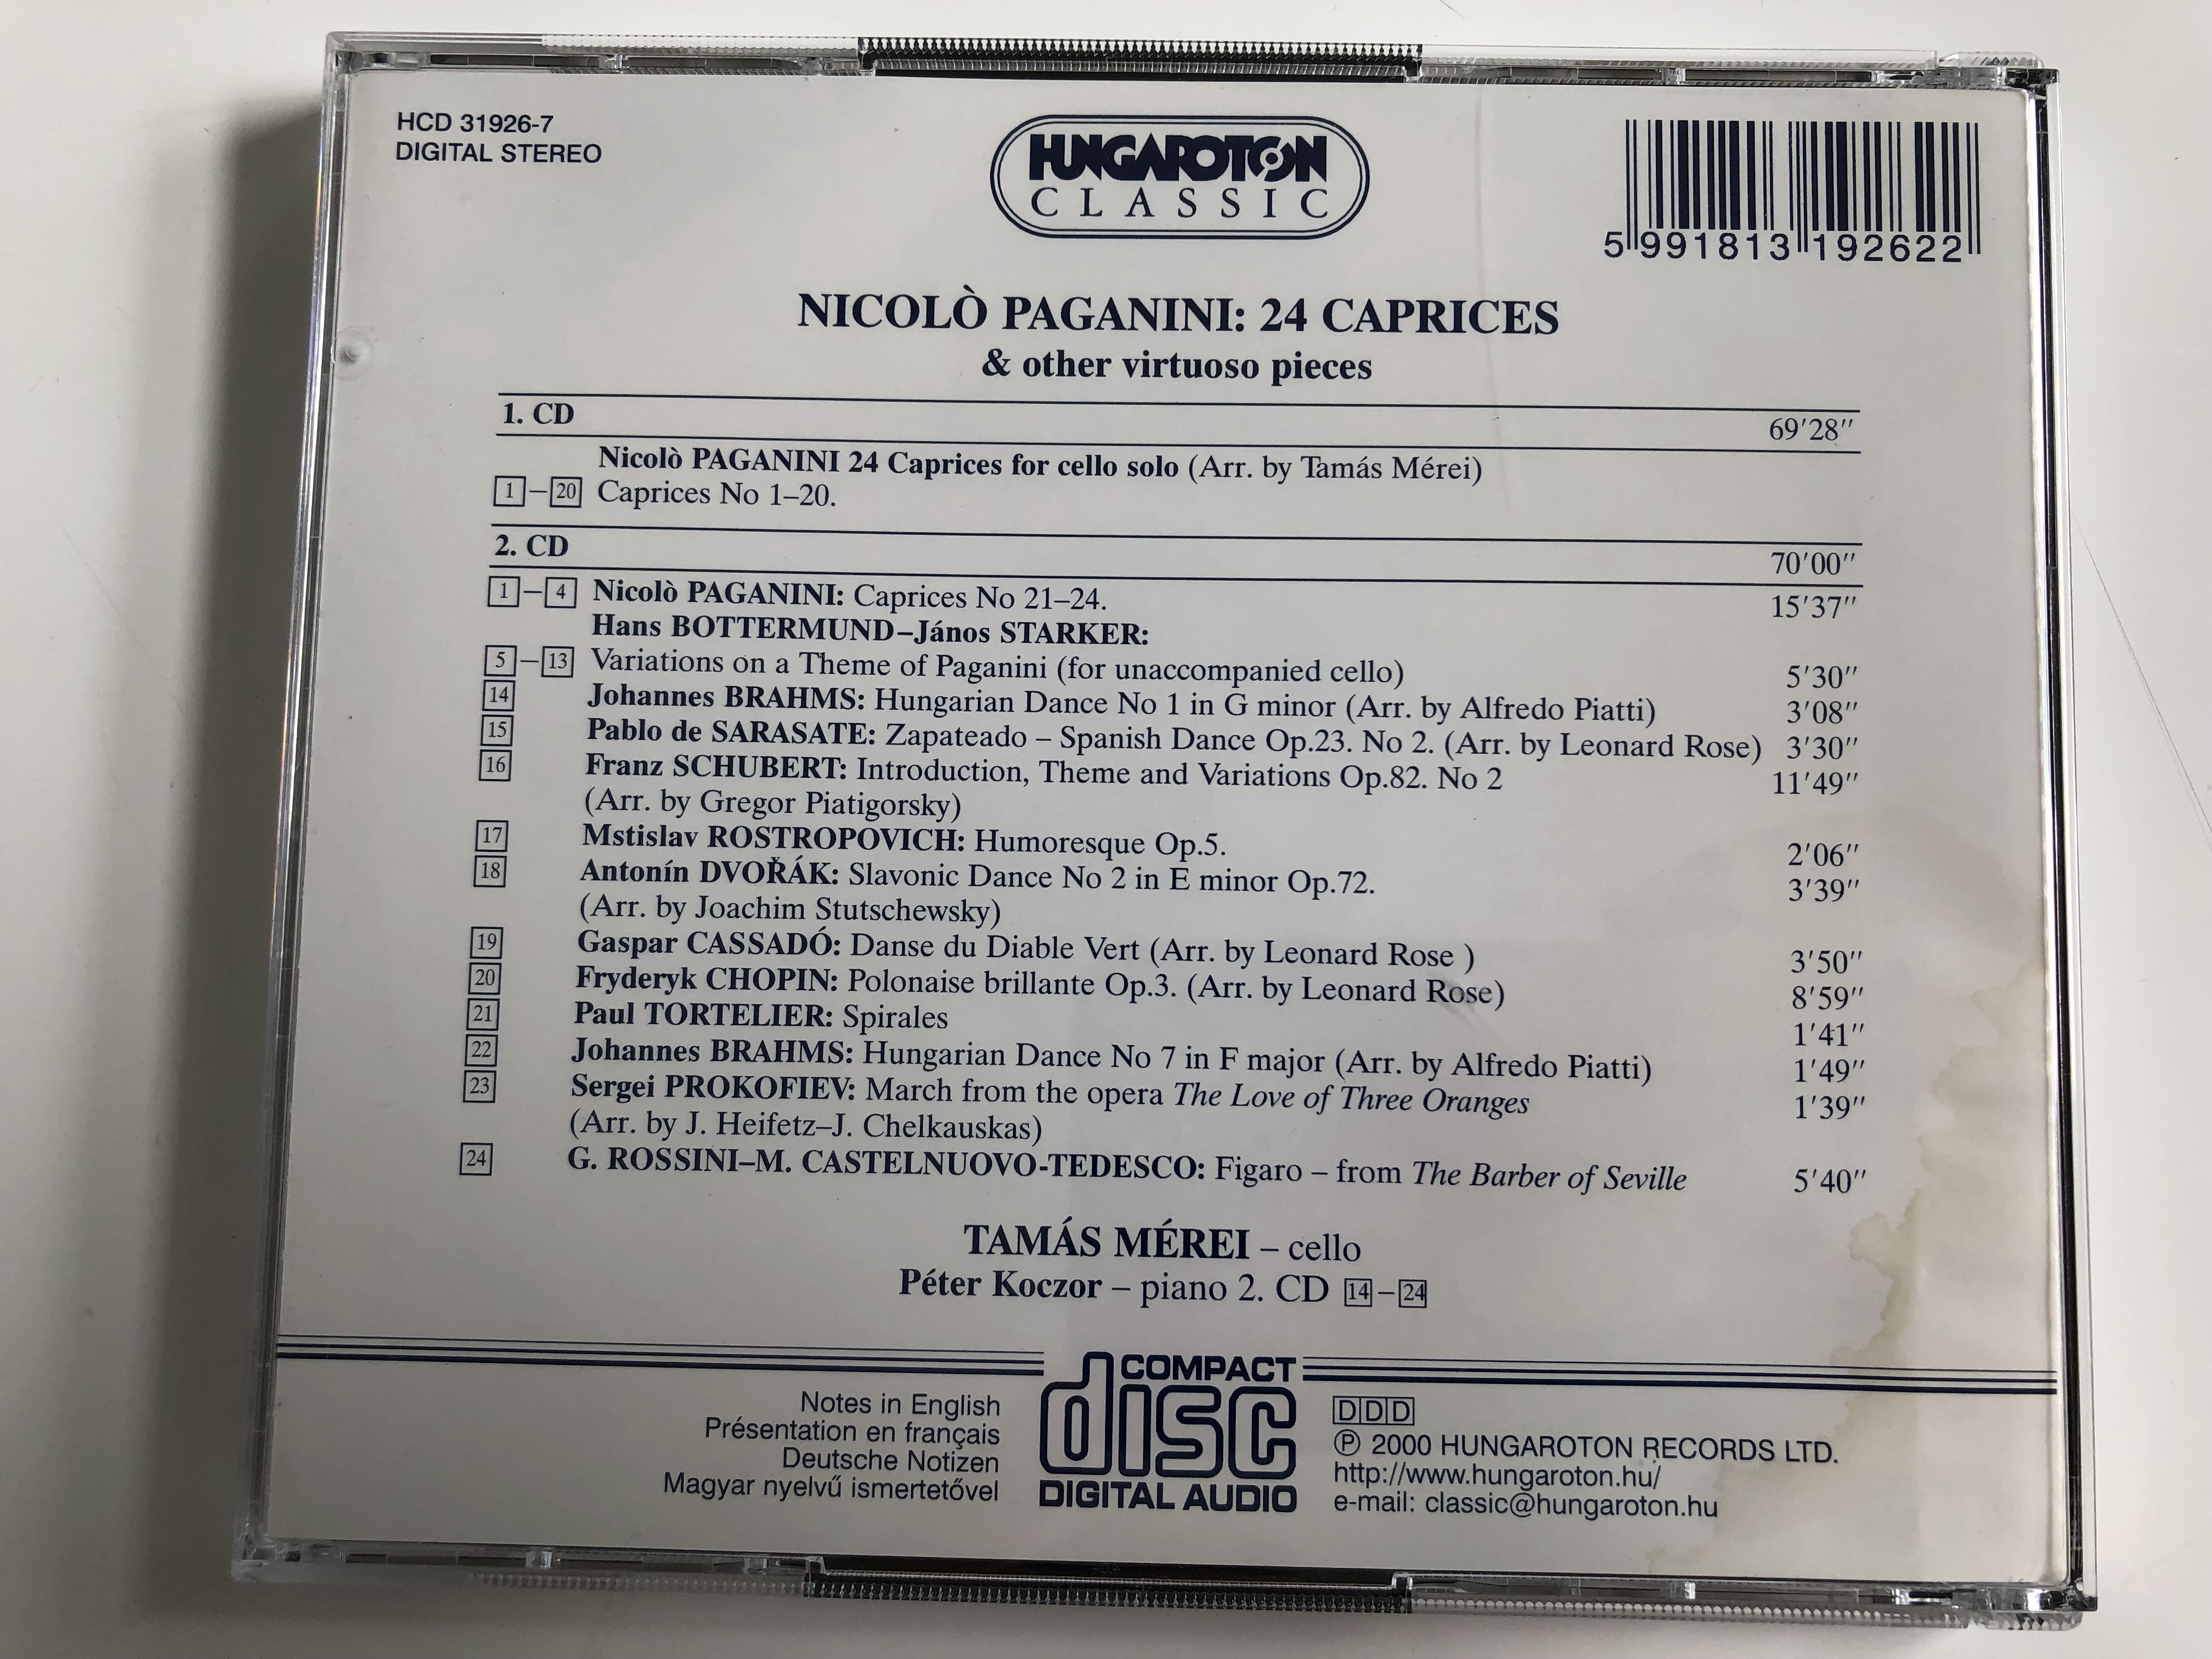 paganini-24-caprices-other-virtuoso-pieces-cello-tamas-merei-piano-peter-koczor-hungaroton-2x-audio-cd-2000-stereo-hcd-31926-27-10-.jpg